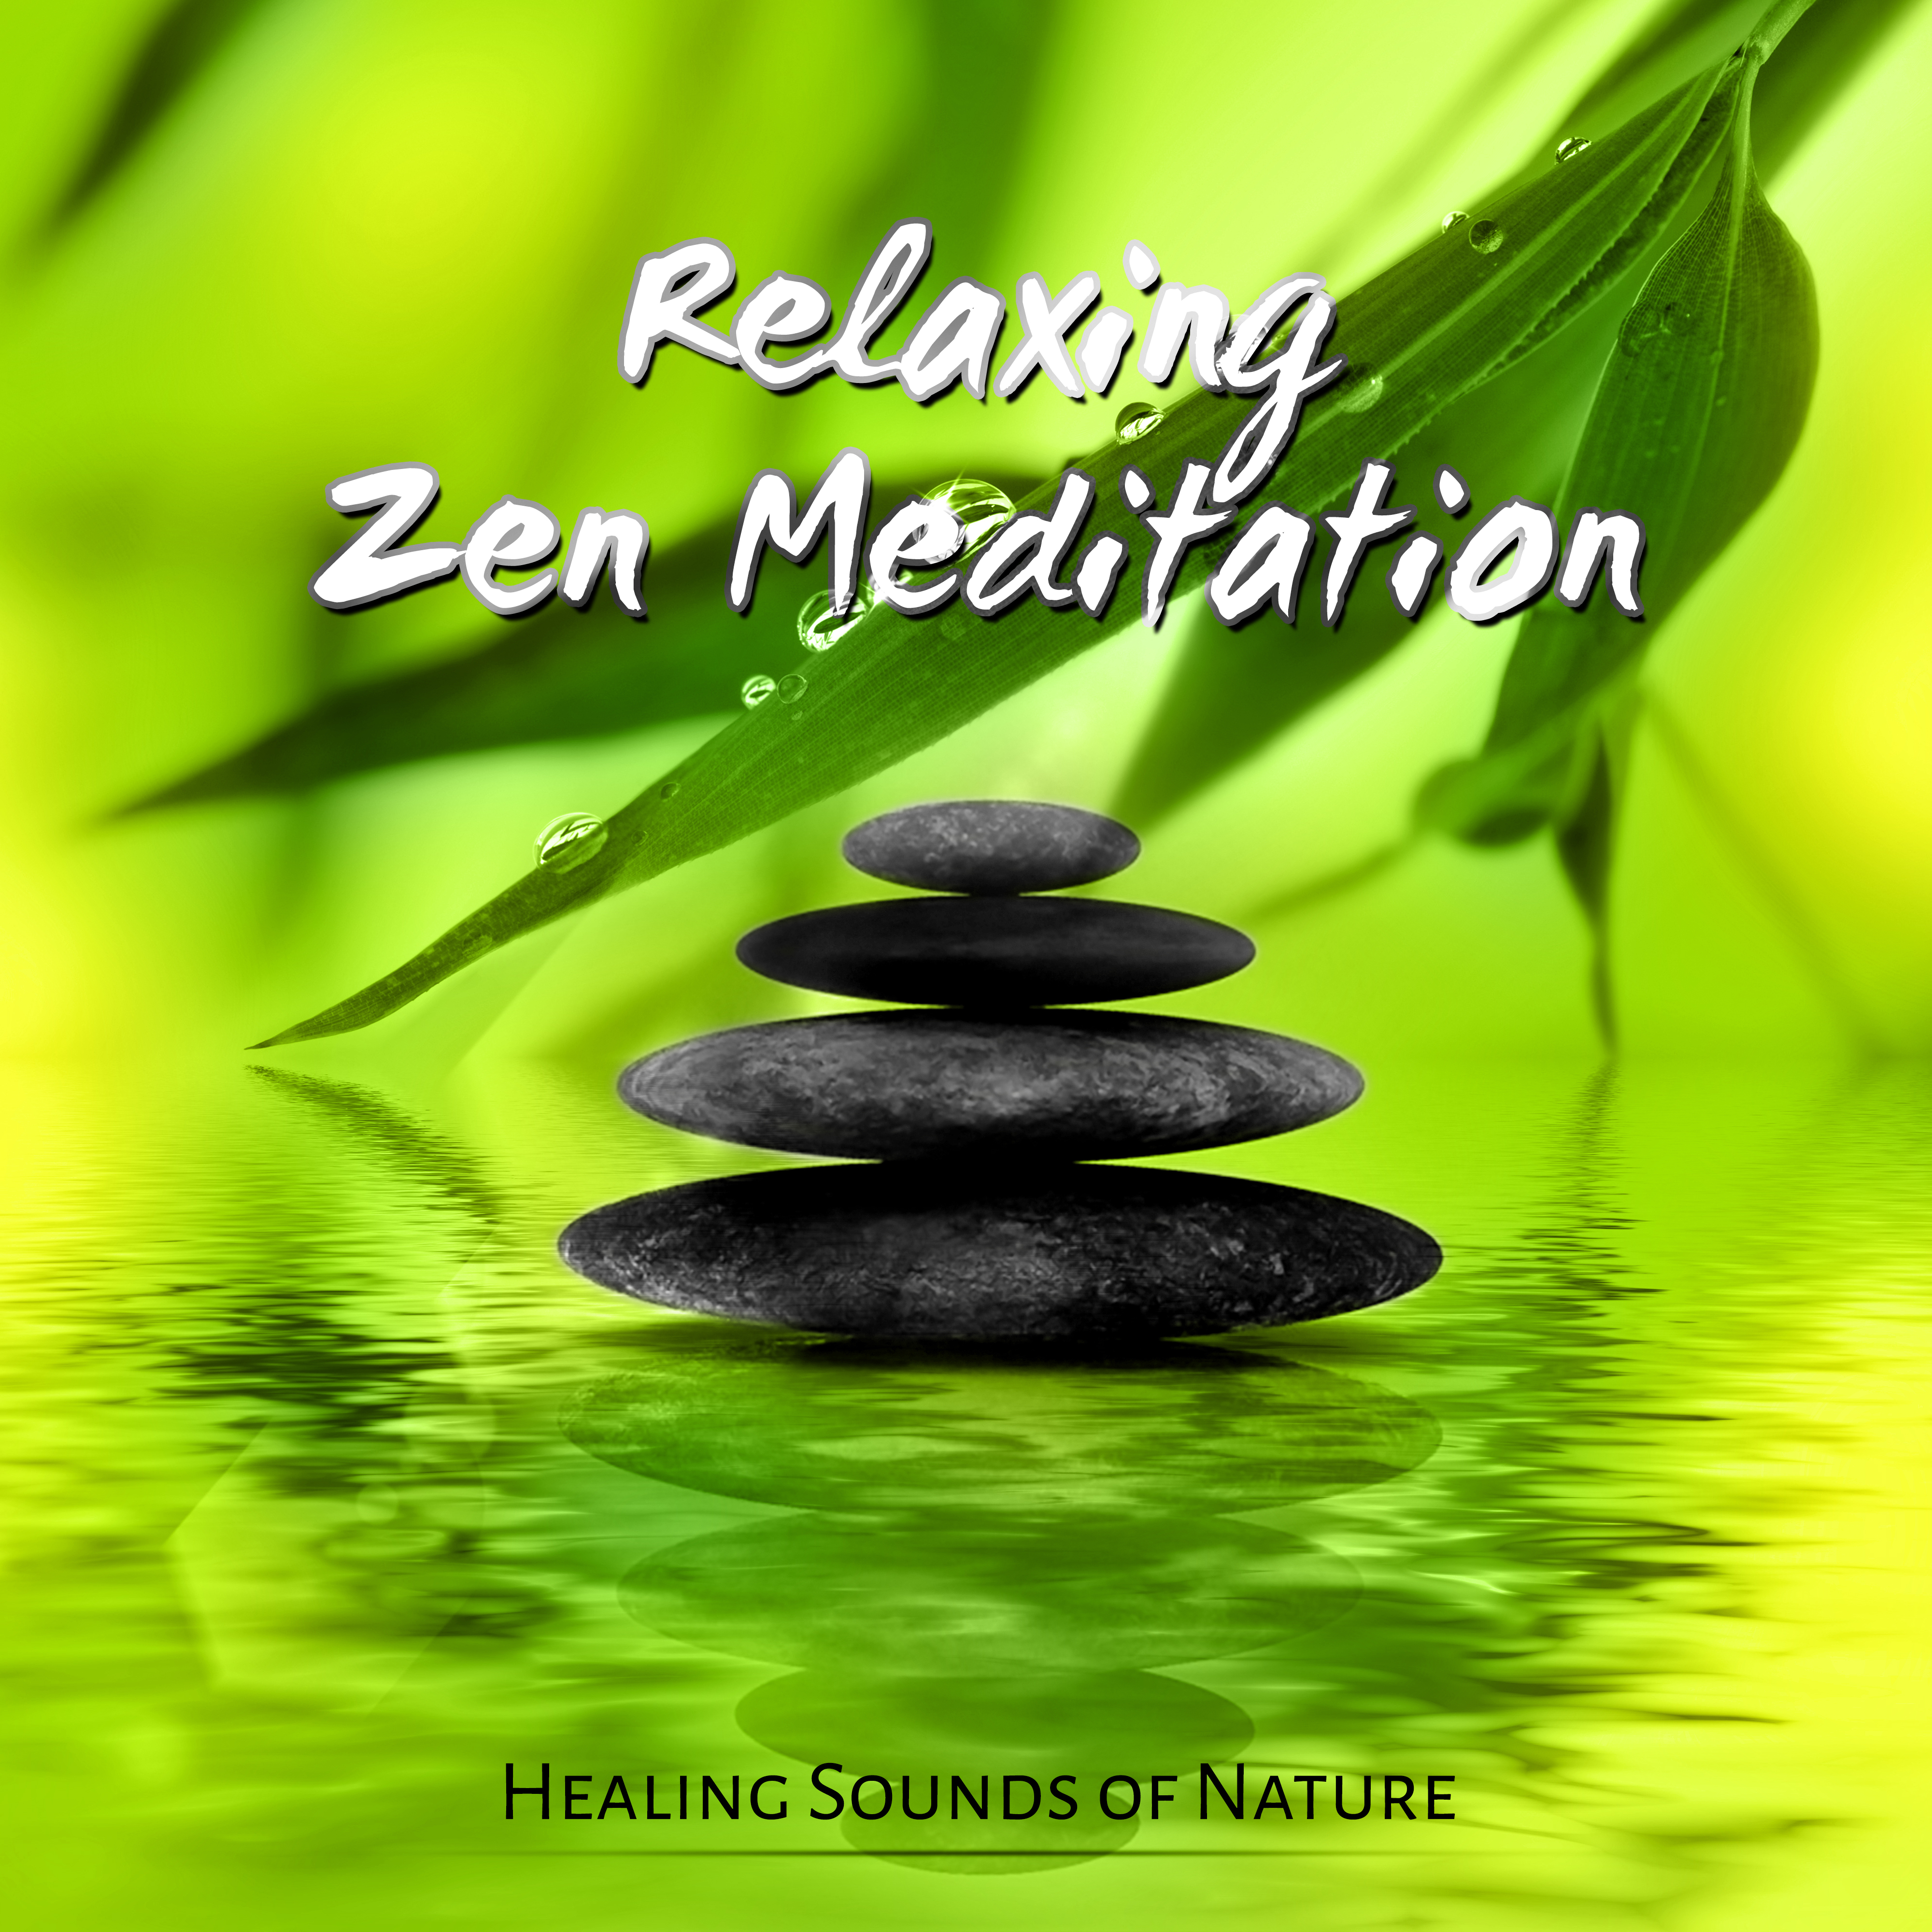 Relaxing Zen Meditation - Positive Music for Mindfulness Meditation Practices, Namaste Yoga & Healing Sounds of Nature